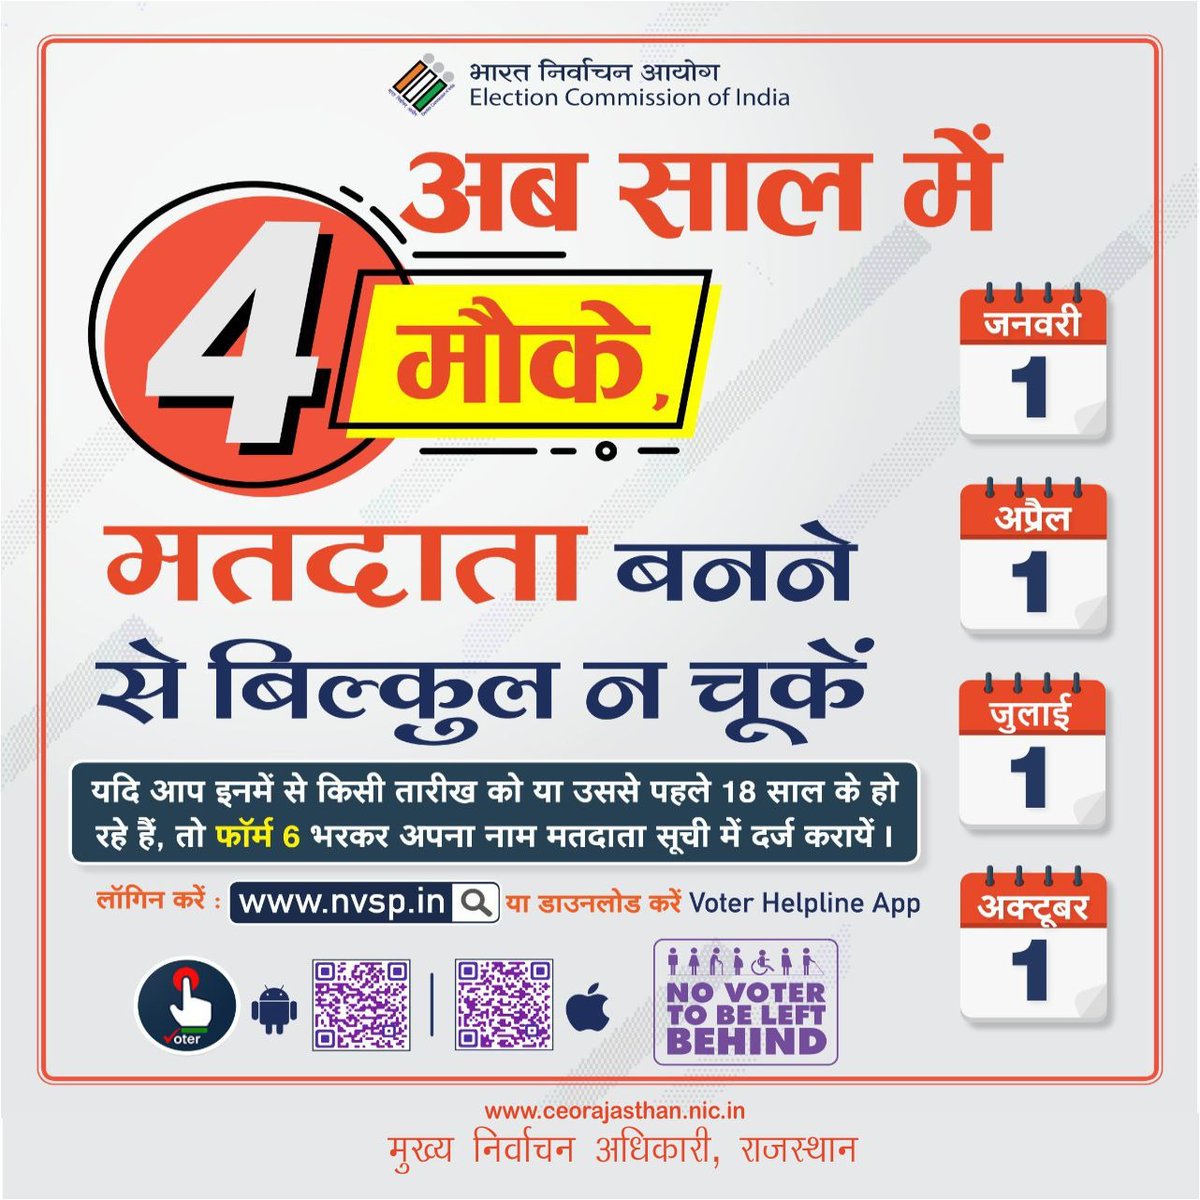 Get registered as Voter now four times in an year.

#GoVote #MyVoteMyPower #BridgingTheGap #ECISVEEP #ElectionCommissionOfIndia #ECI
@ECISVEEP @SpokespersonECI @rajivkumarec